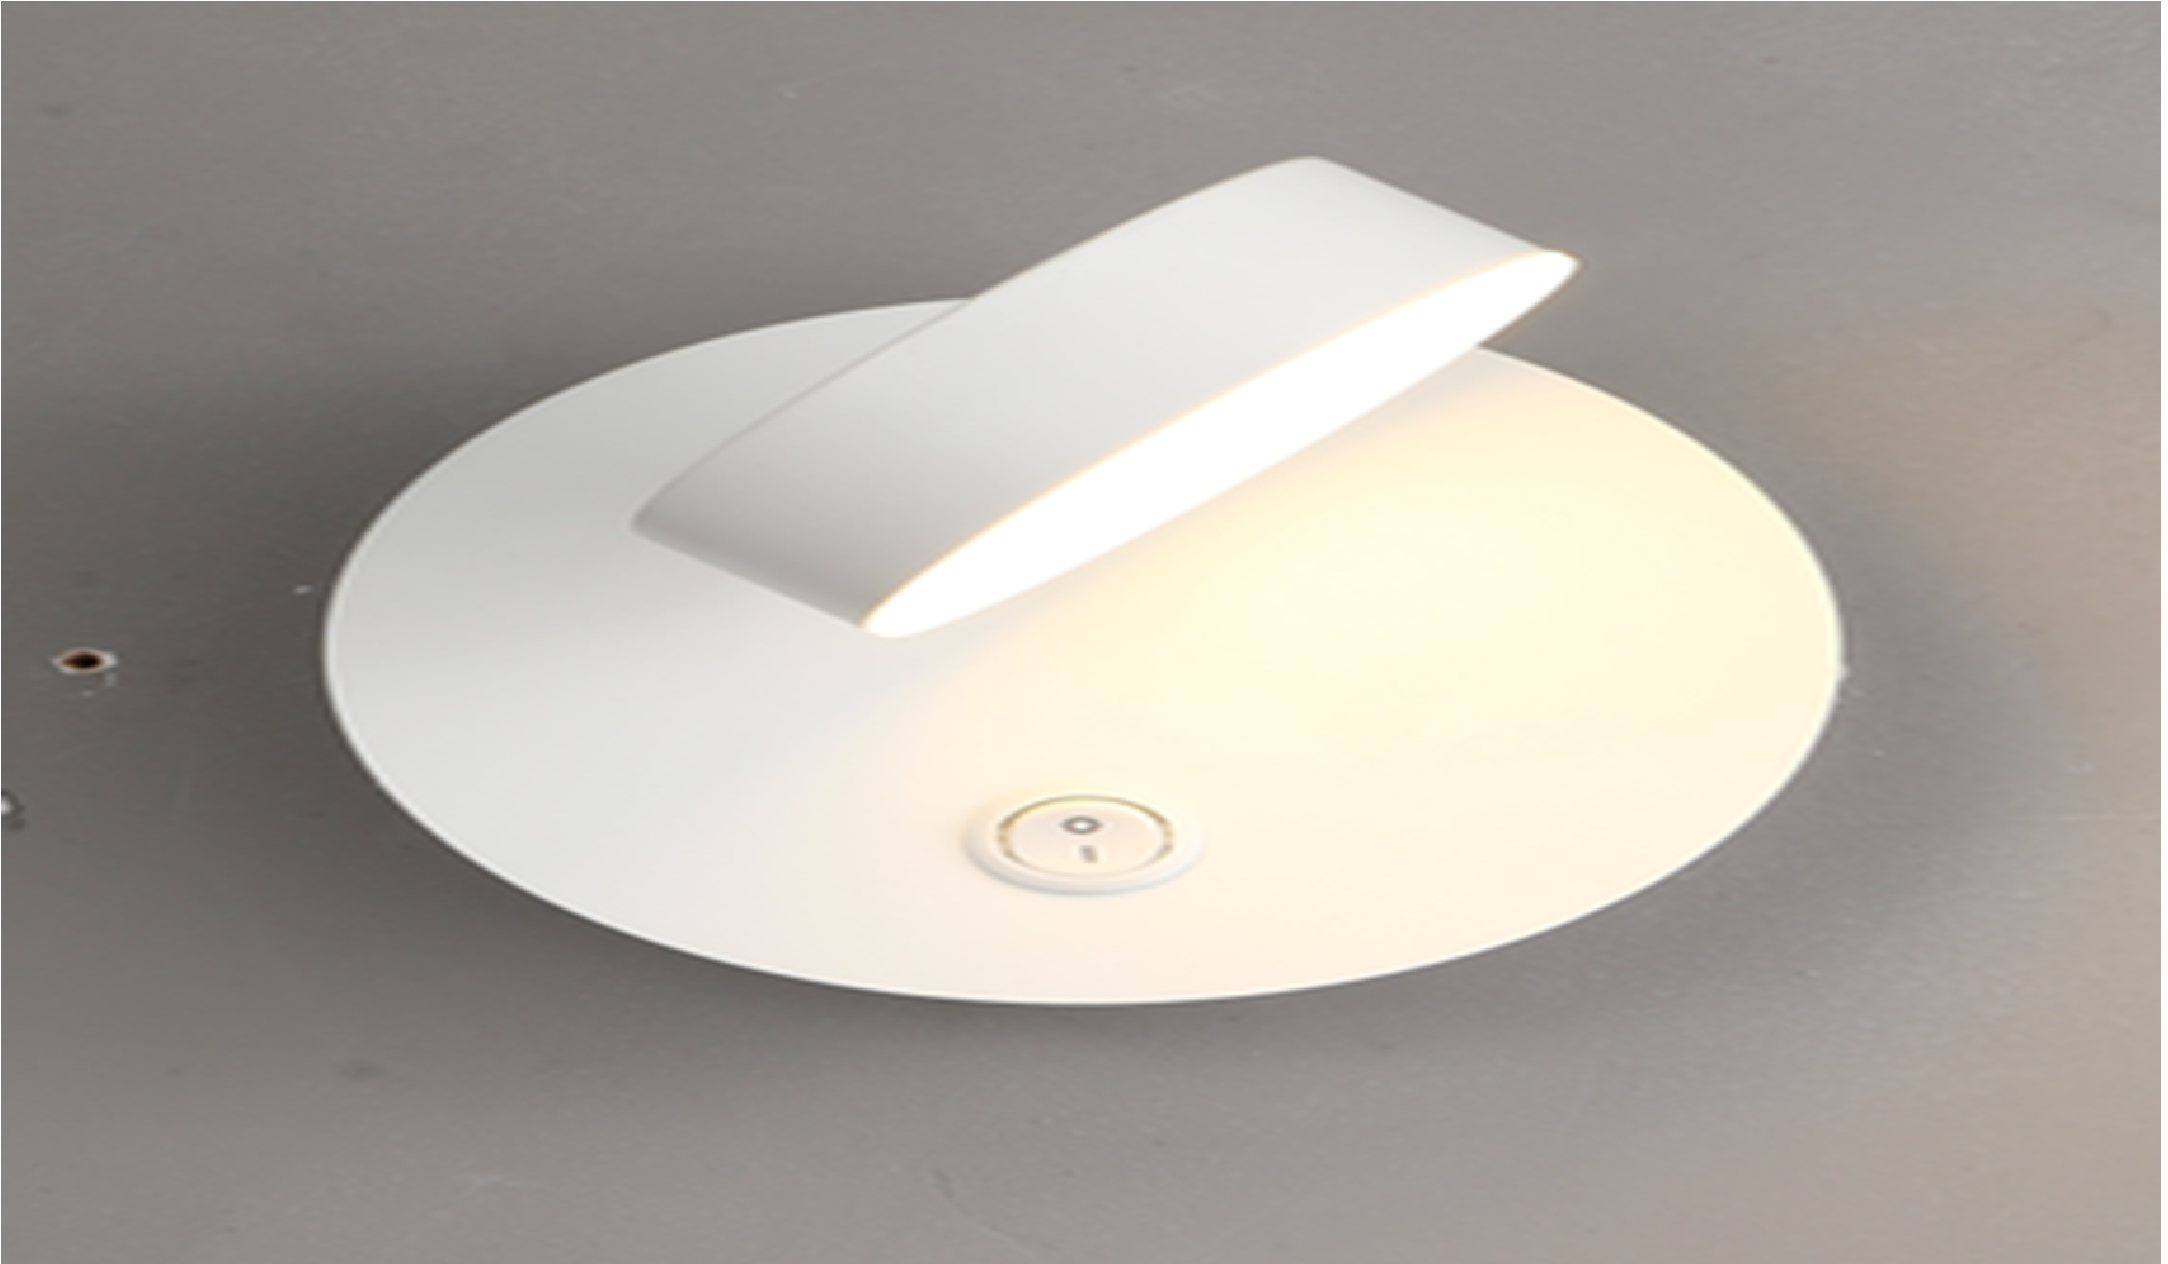 9053 Premium 7W LED Sleep Light Rotatable Reading Wall Sconces Lamp